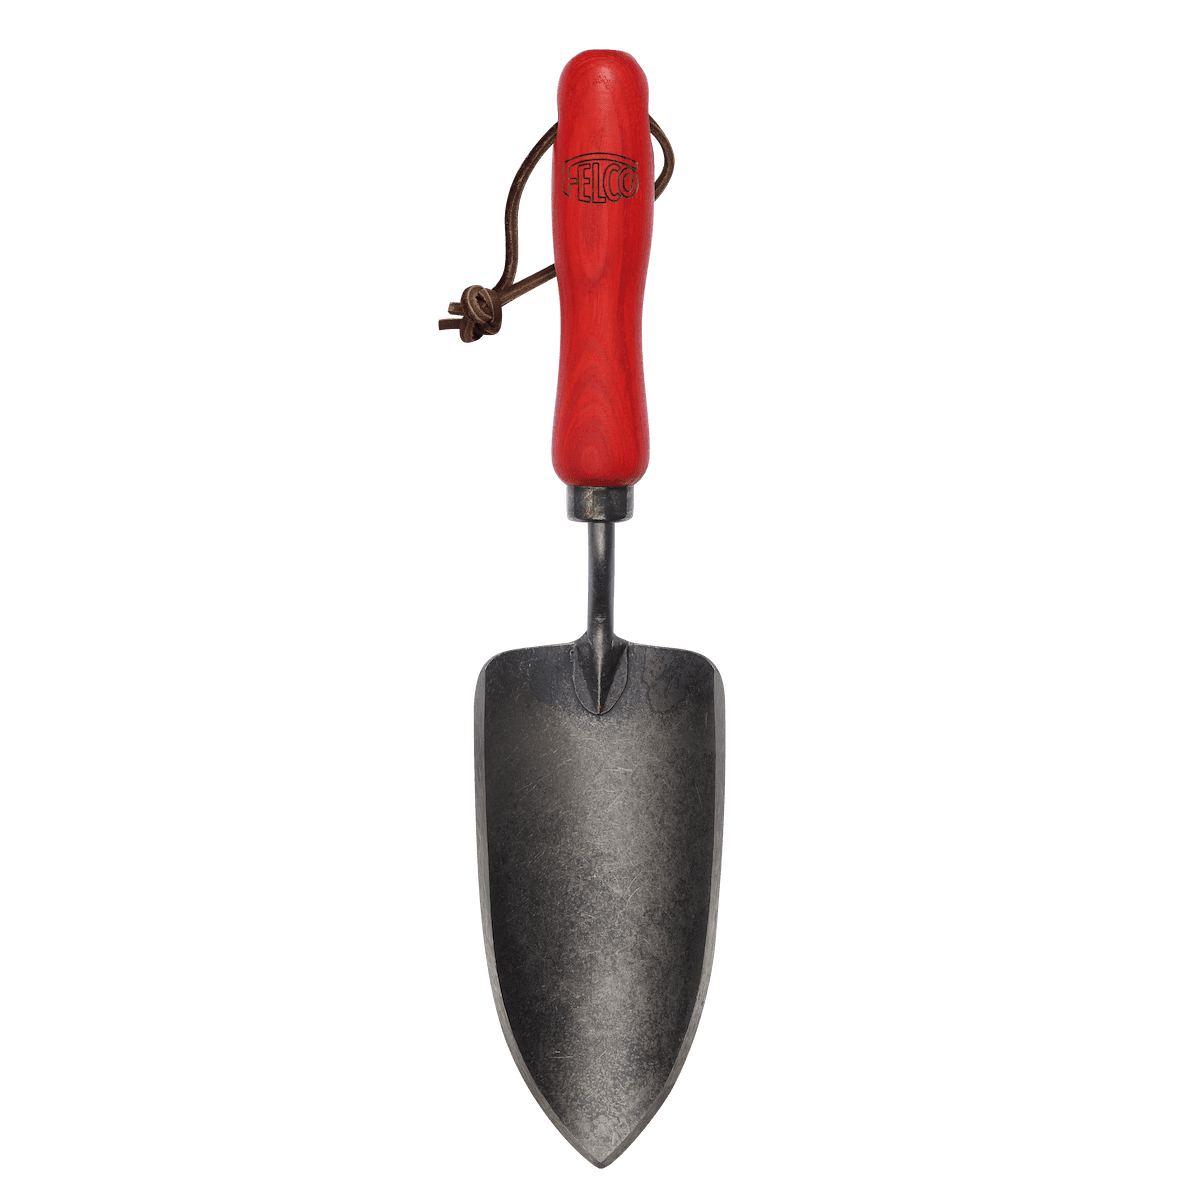 Felco Gardening Hand Tool 401 Trowel F-401